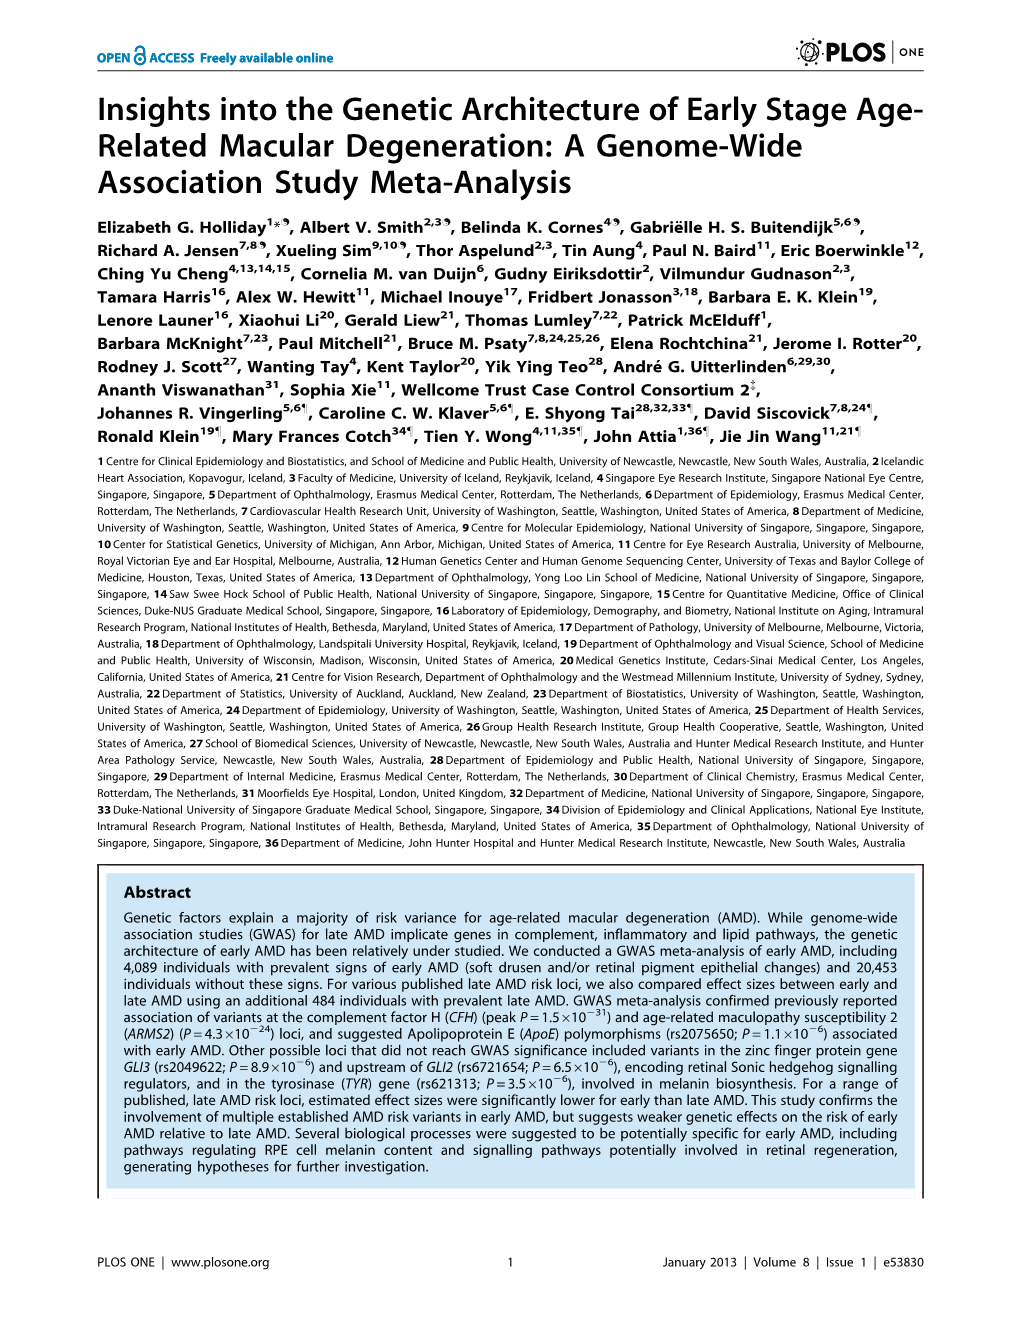 A Genome-Wide Association Study Meta-Analysis